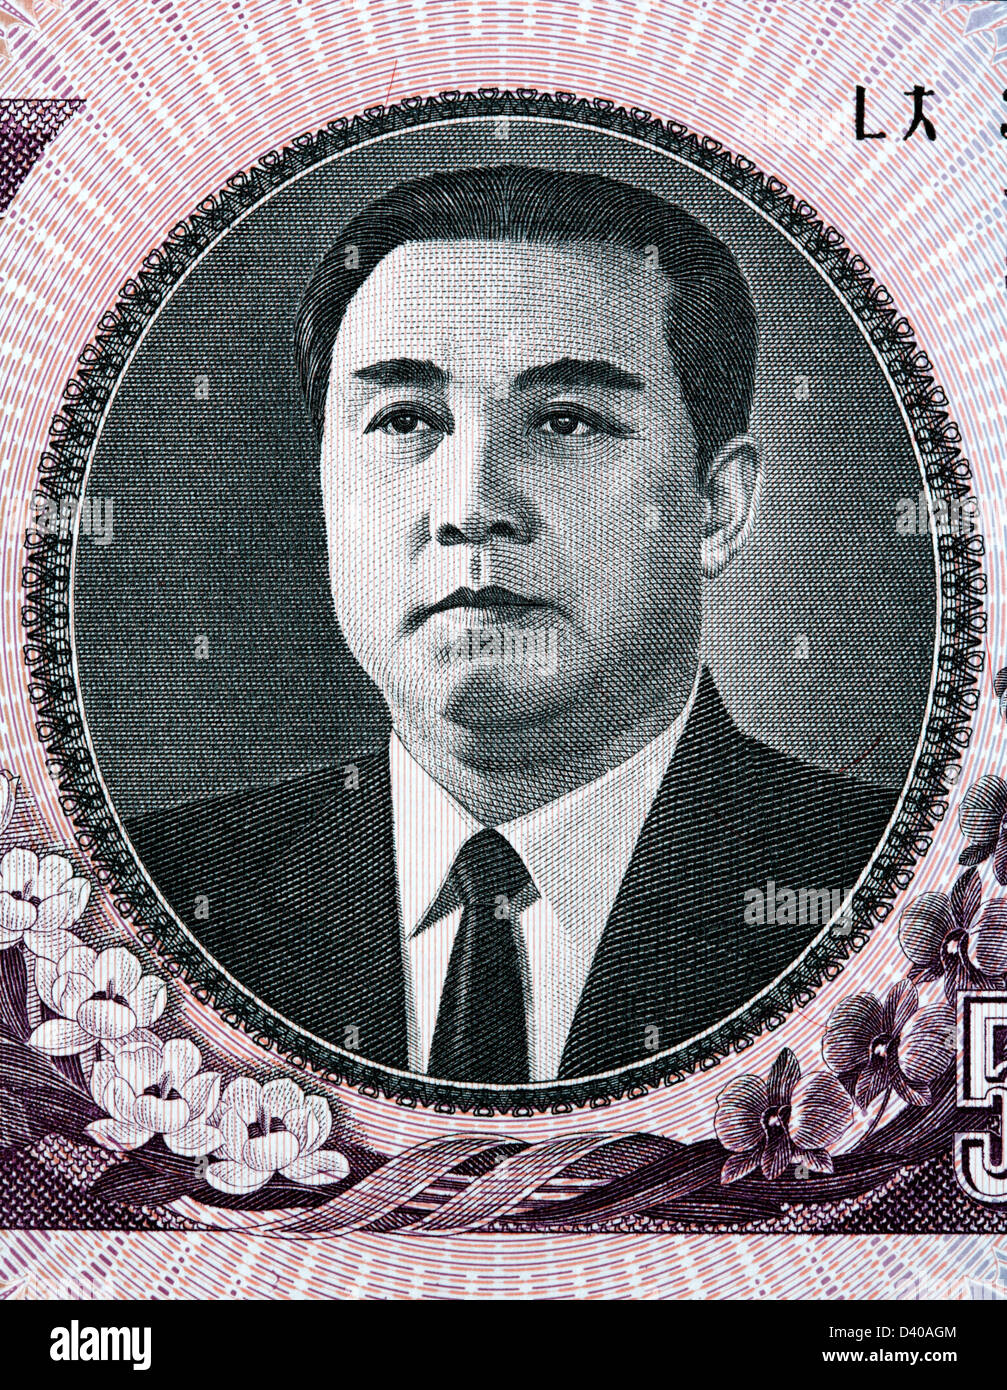 Portrait of Kim II Sung from 5000 Won banknote, North Korea, 2002 Stock Photo